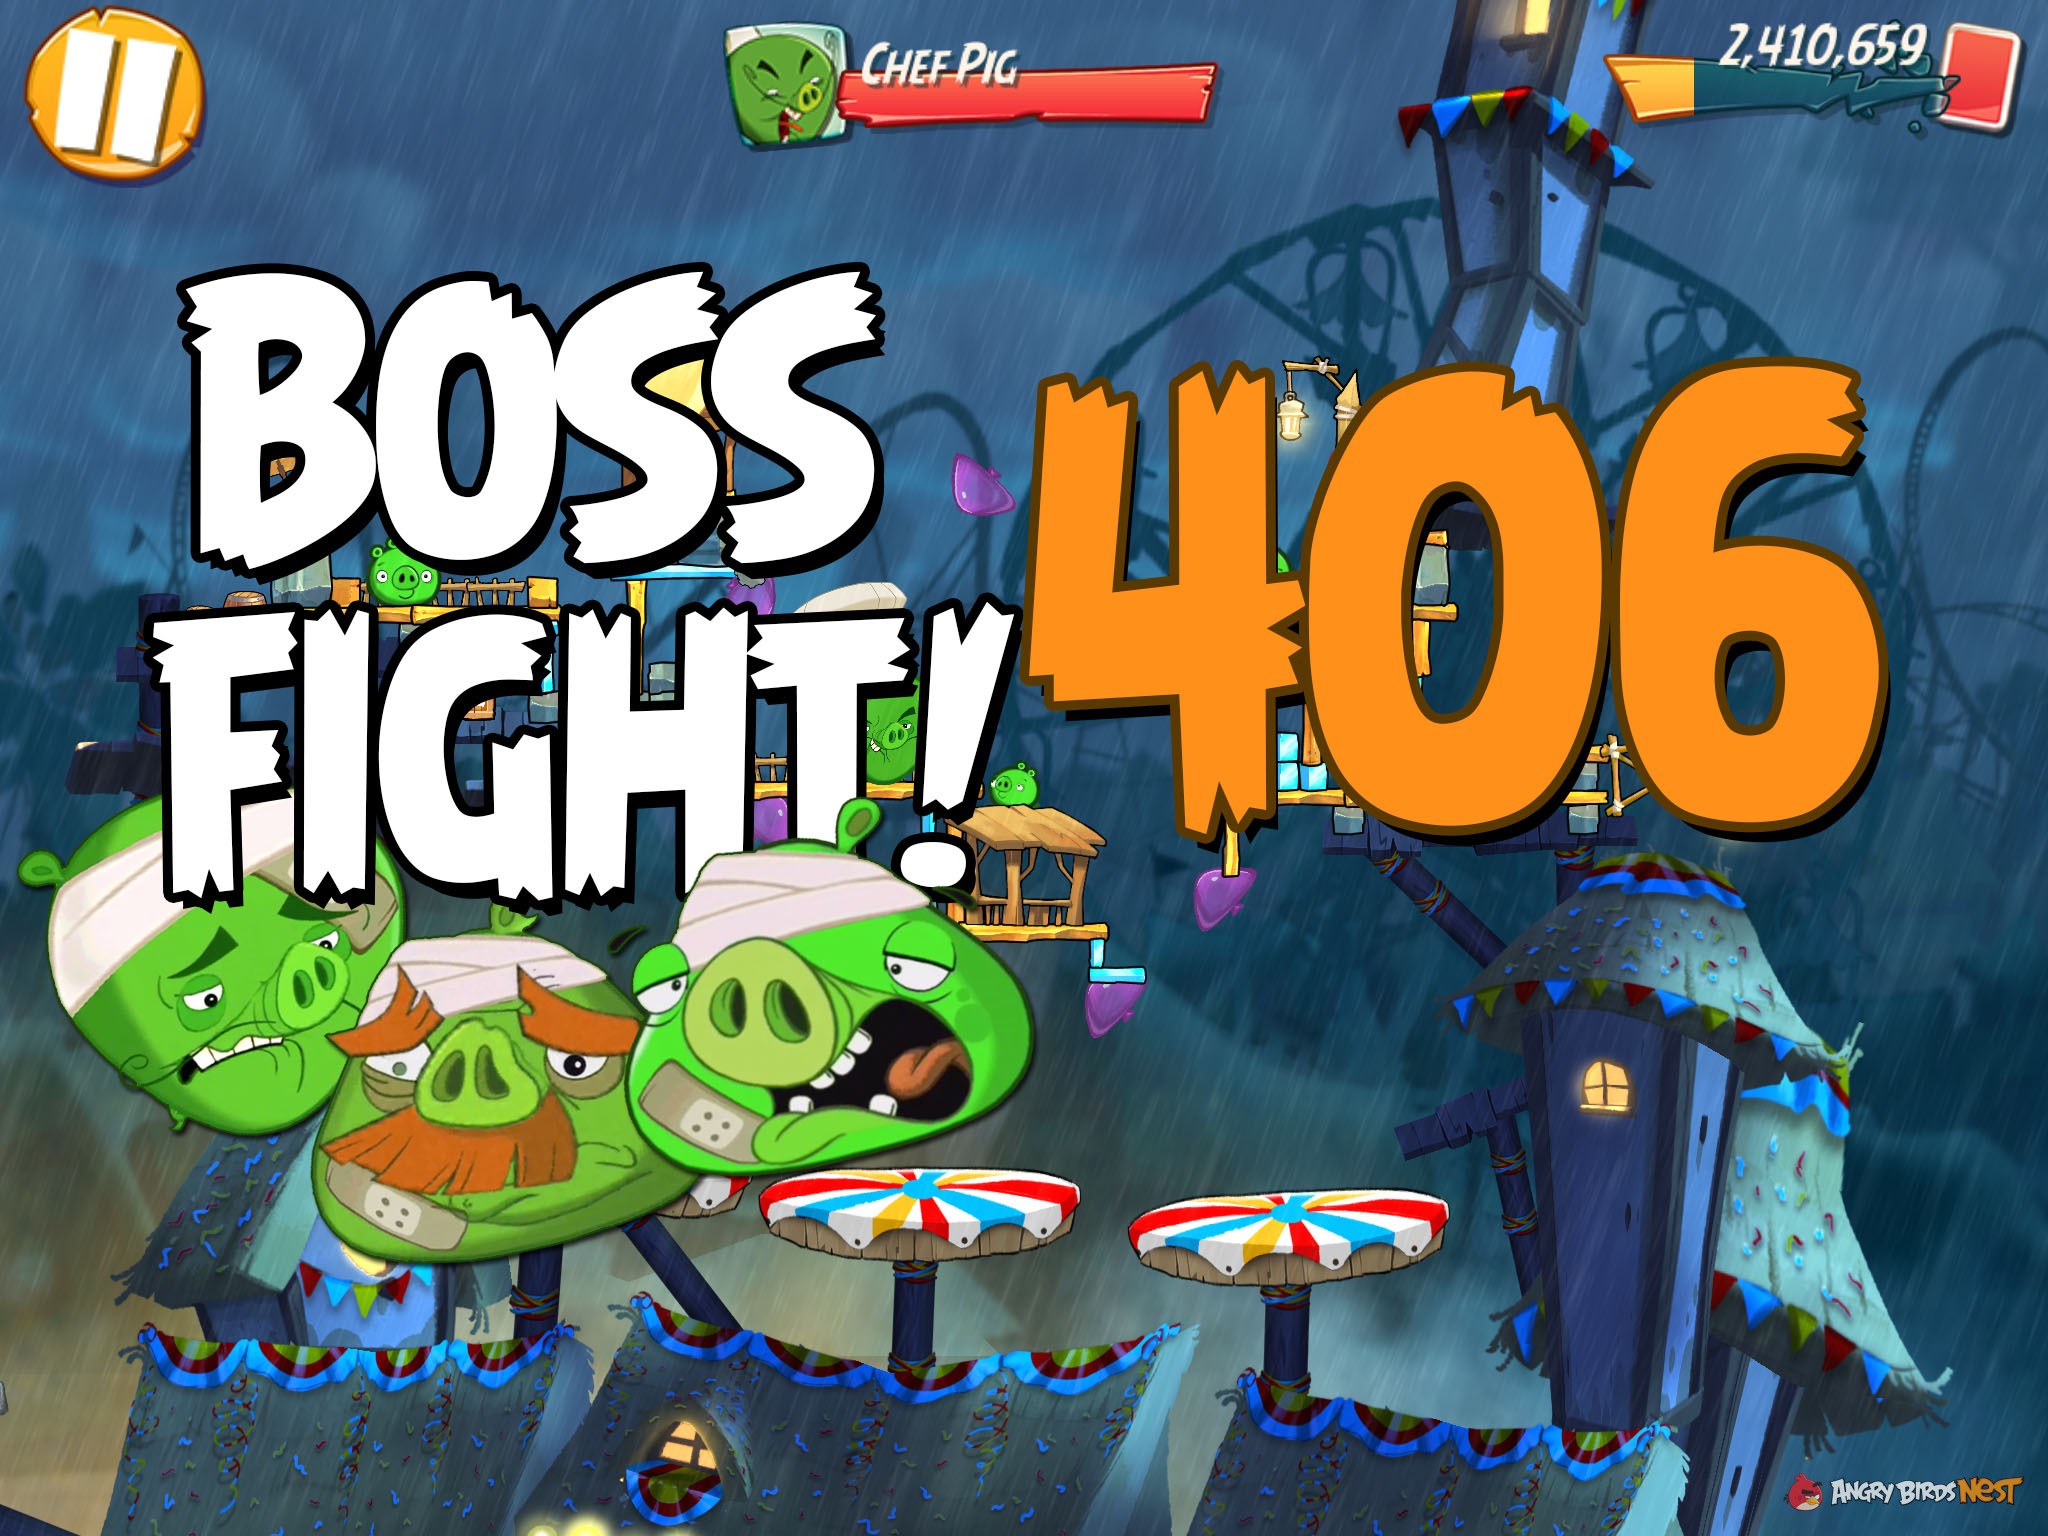 Angry Birds 2 Boss Fight Level 406 Walkthrough Pig City Ham Francisco Angrybirdsnest Com Angrybirdsnest